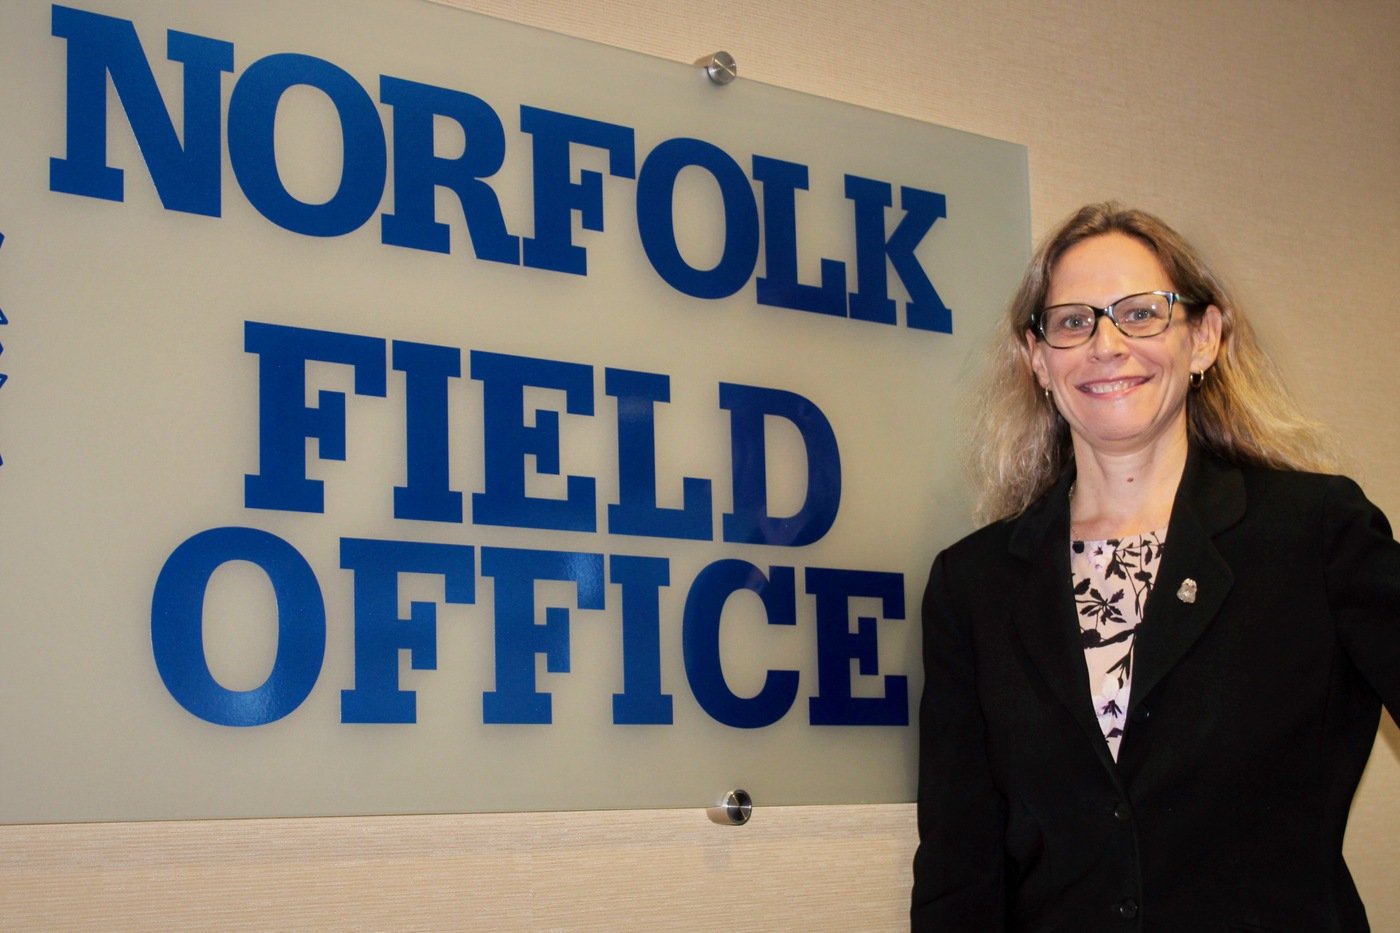 Laura Harper: Norfolk Field Office